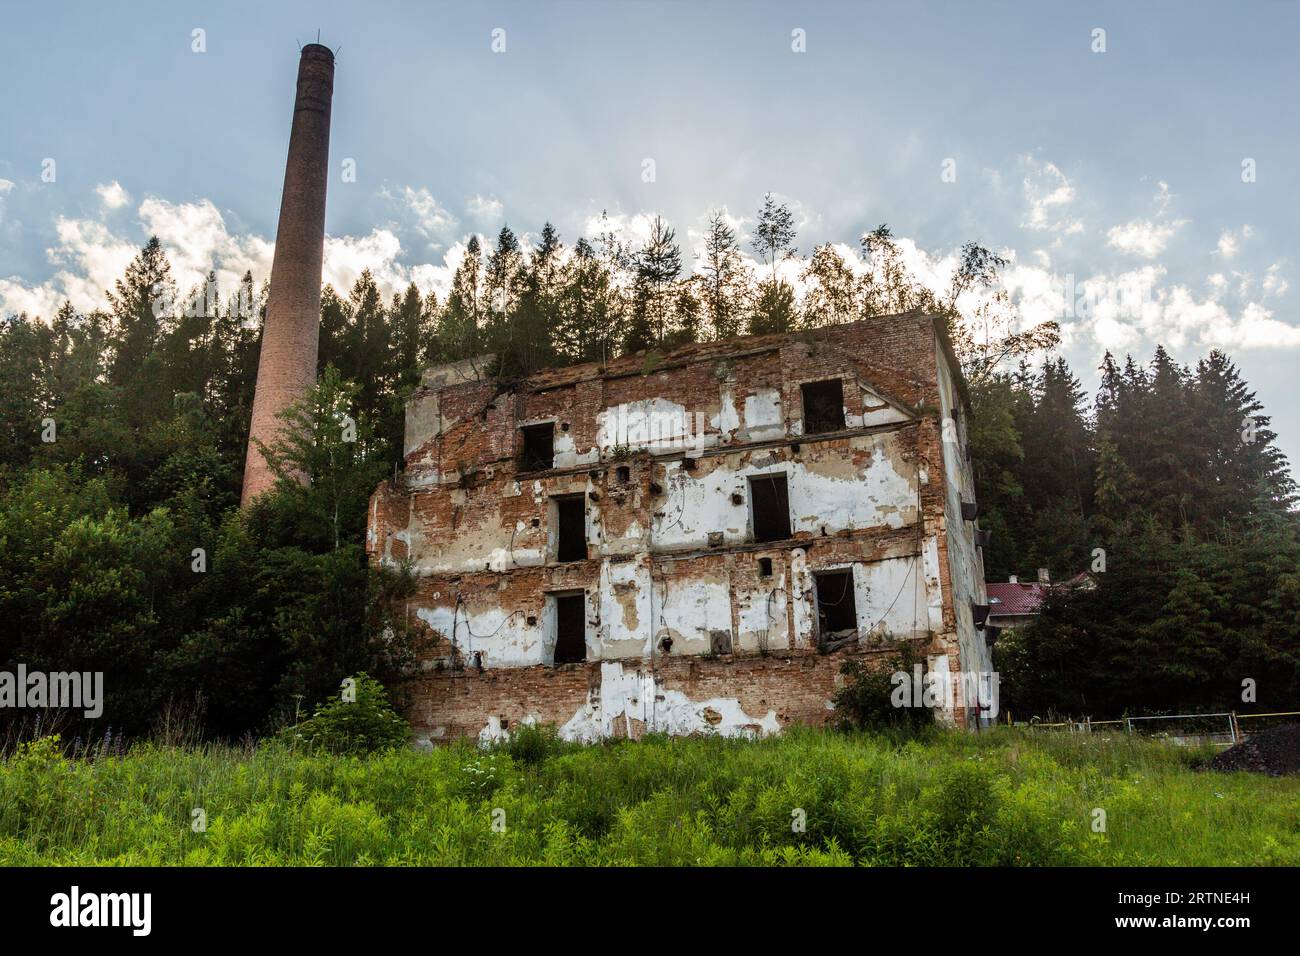 Ruin of an old spinning mill, in Vilemov, Czech Republic Stock Photo